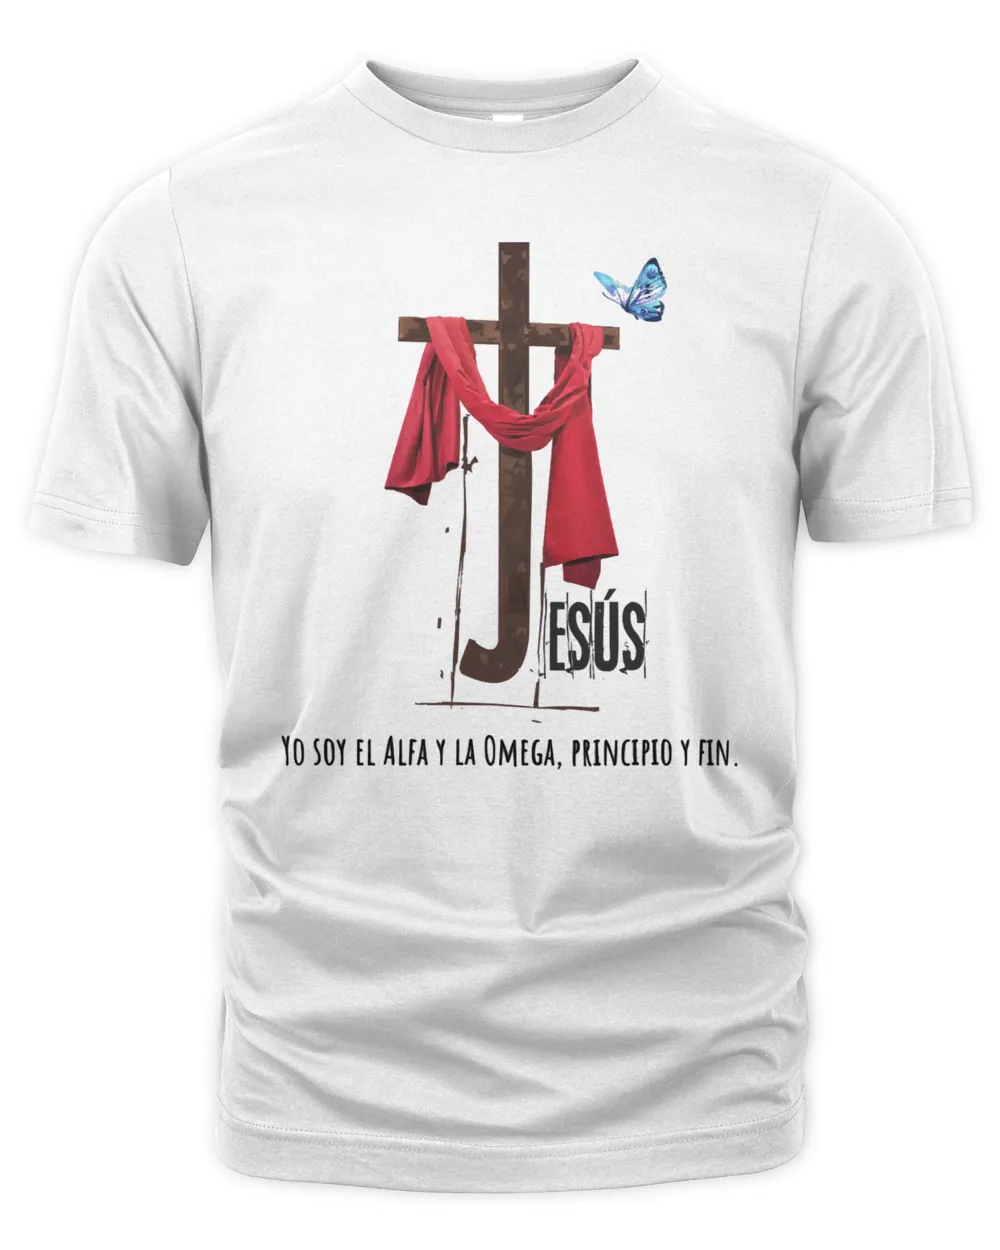 Christian jesus god economic clothing design prayer